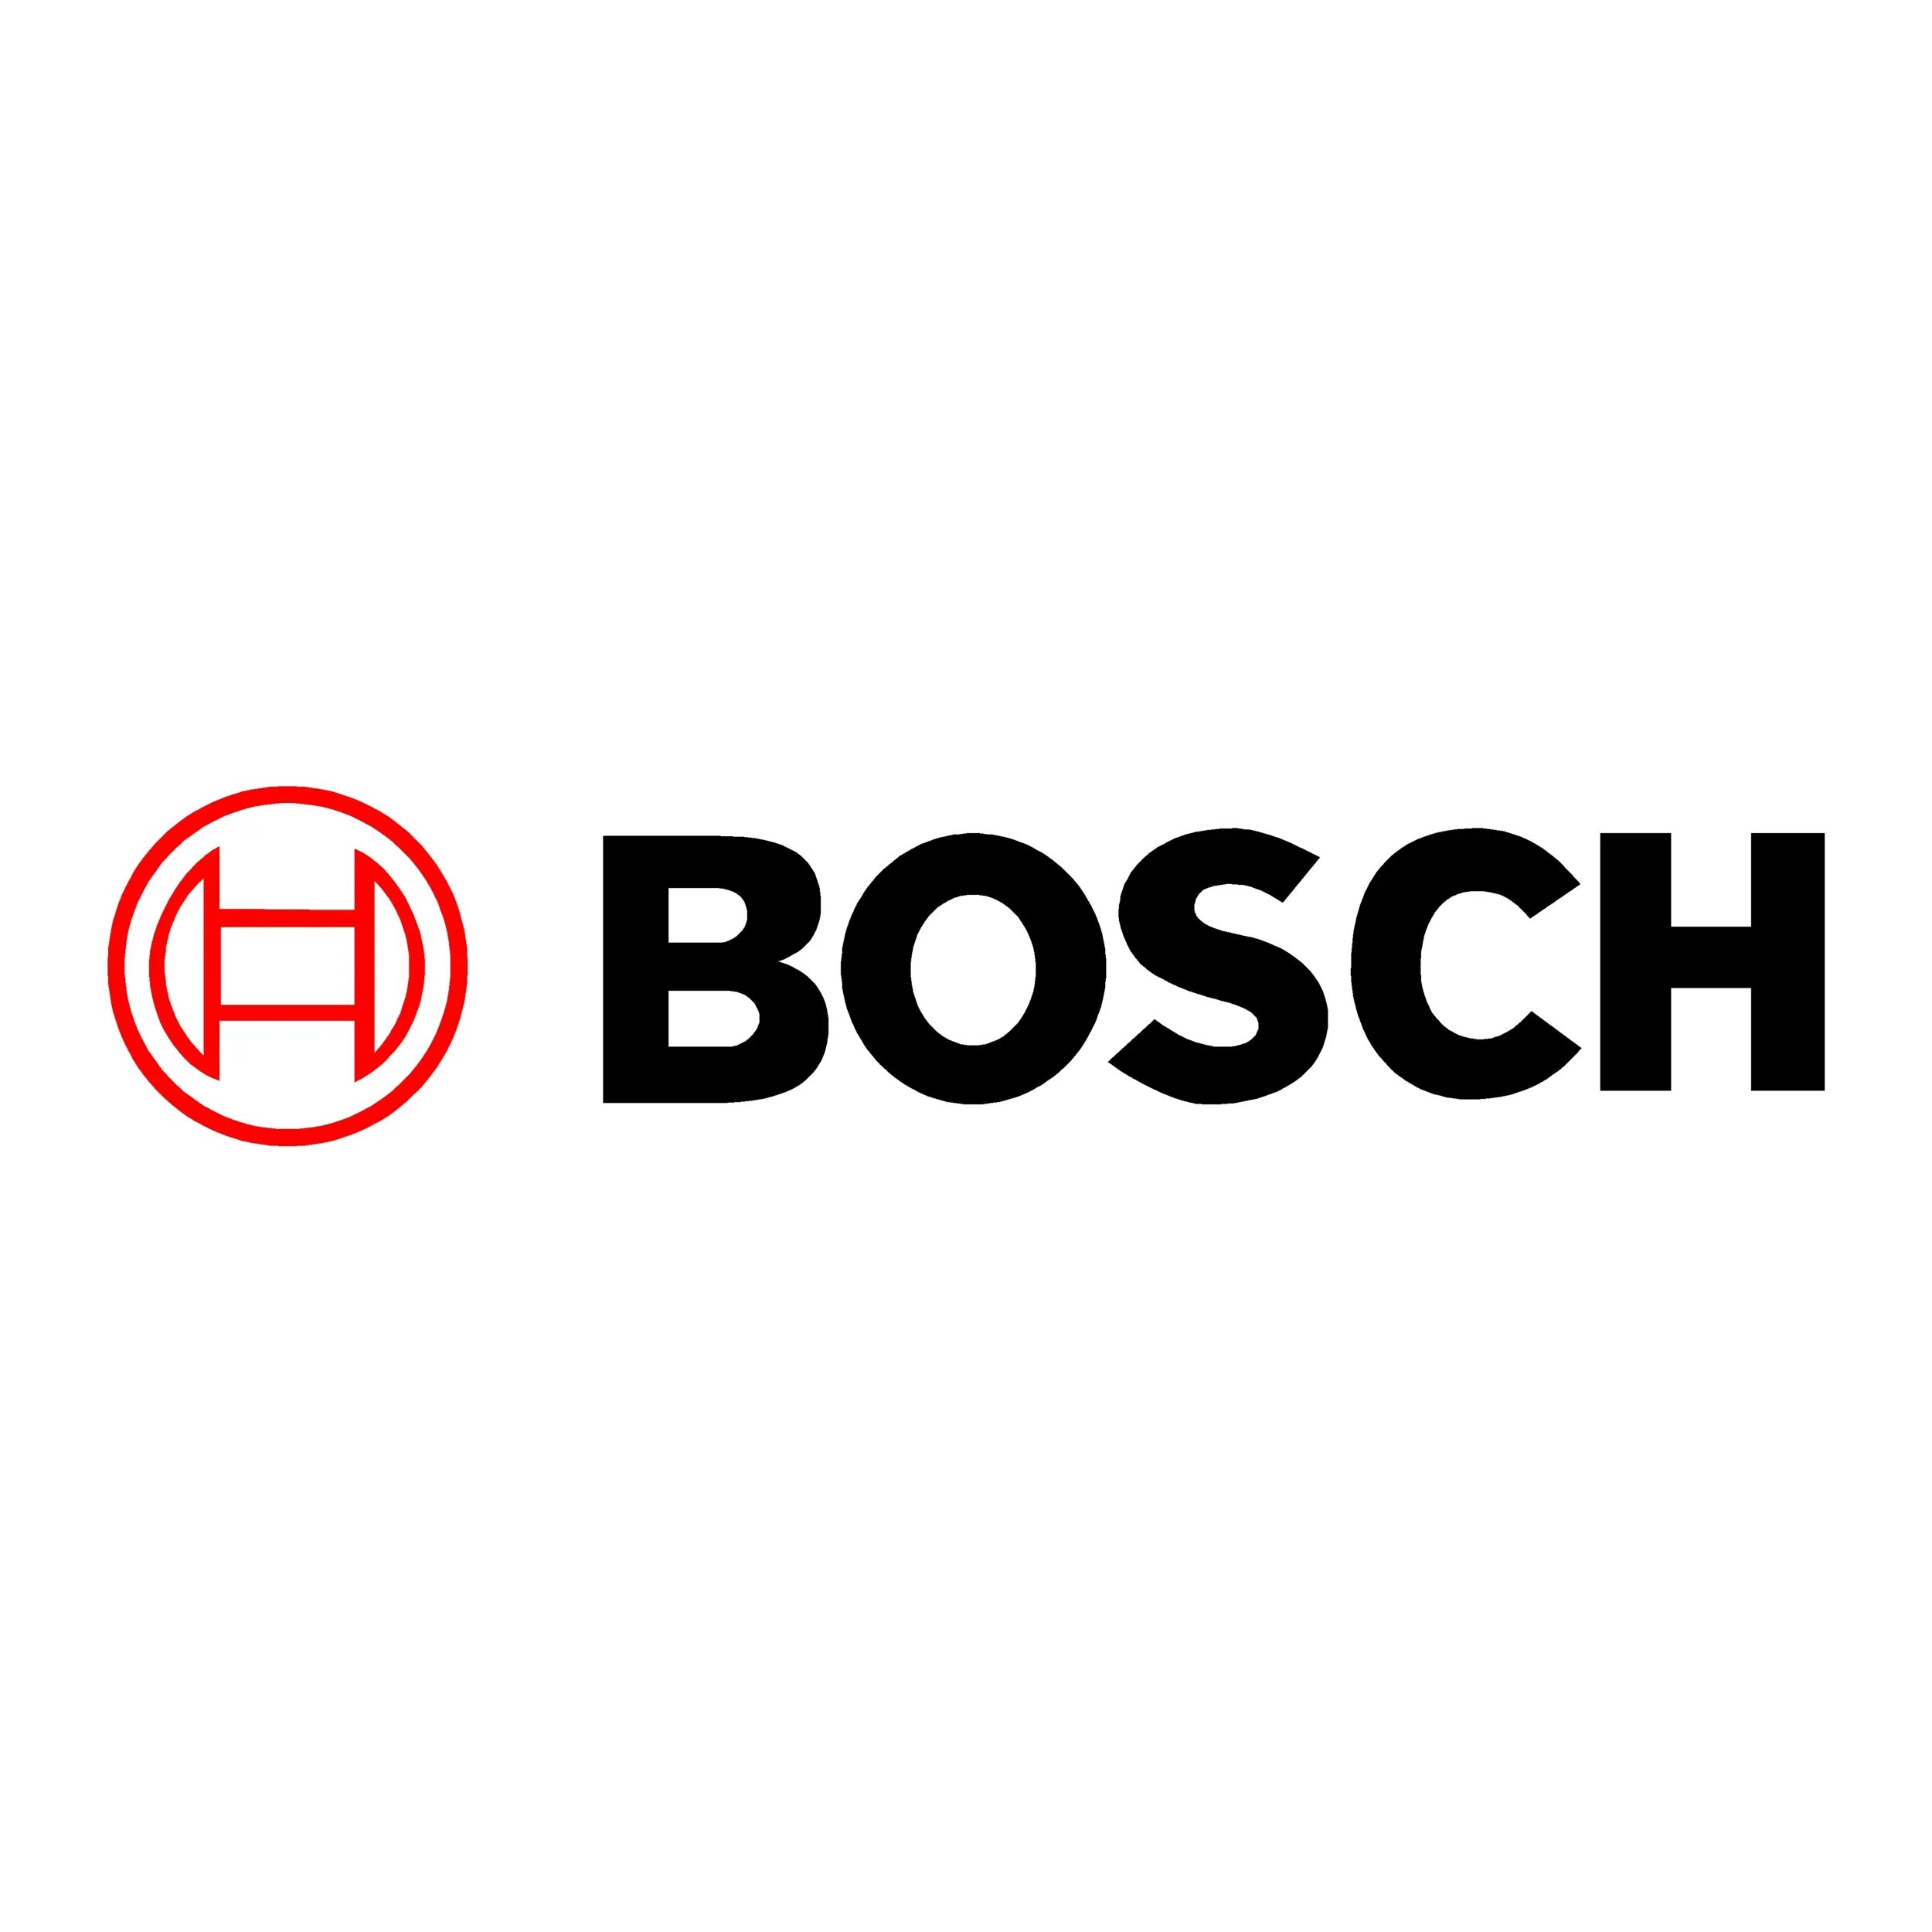 Bosch логотип. Стикер Bosch. Бош логотип инструмент. Наклейка bosch